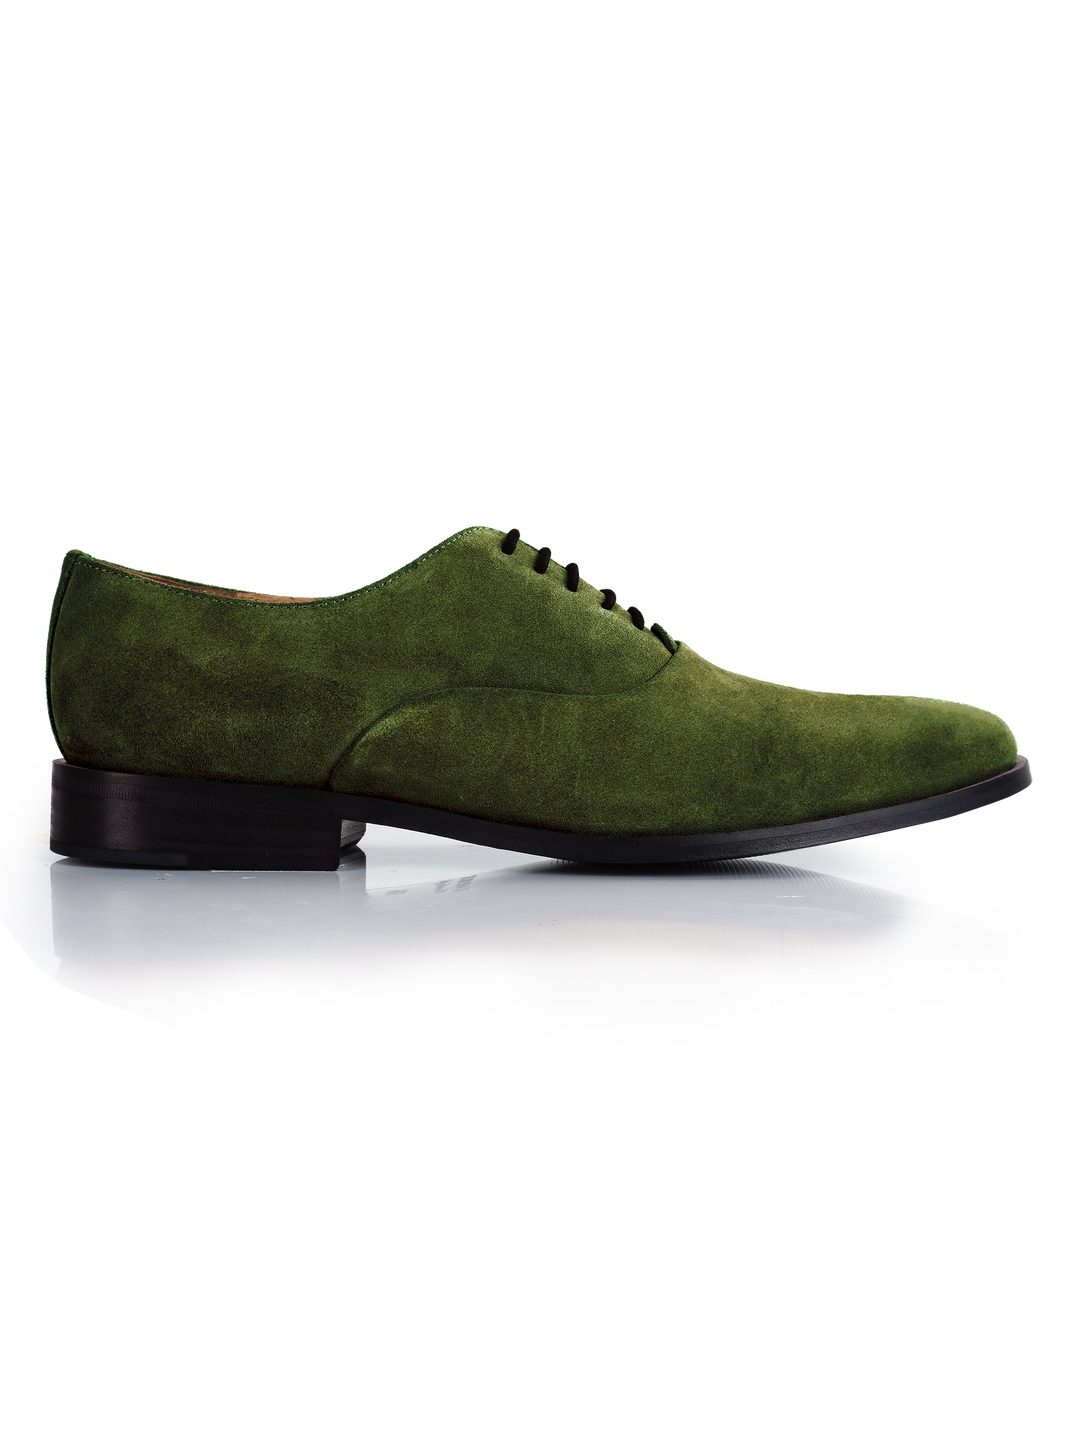 Dark Green Premium Plain Oxford leather shoes for men | Rapawalk